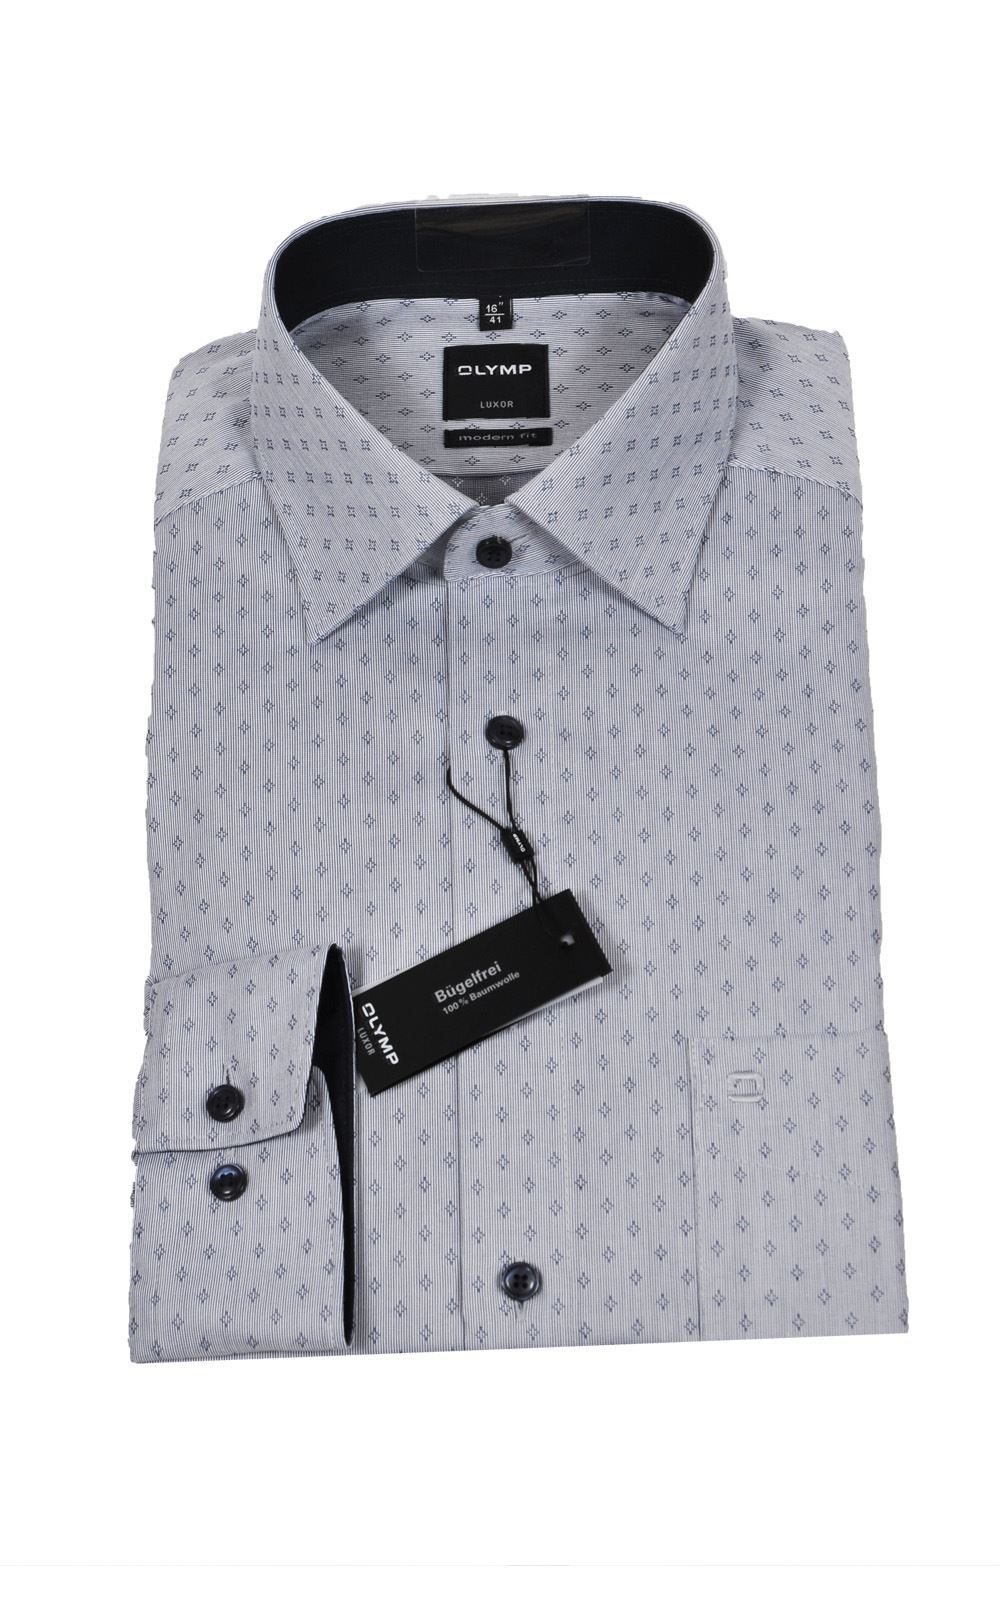 S&T Moore. Olymp Long Sleeve Shirt 1232-44